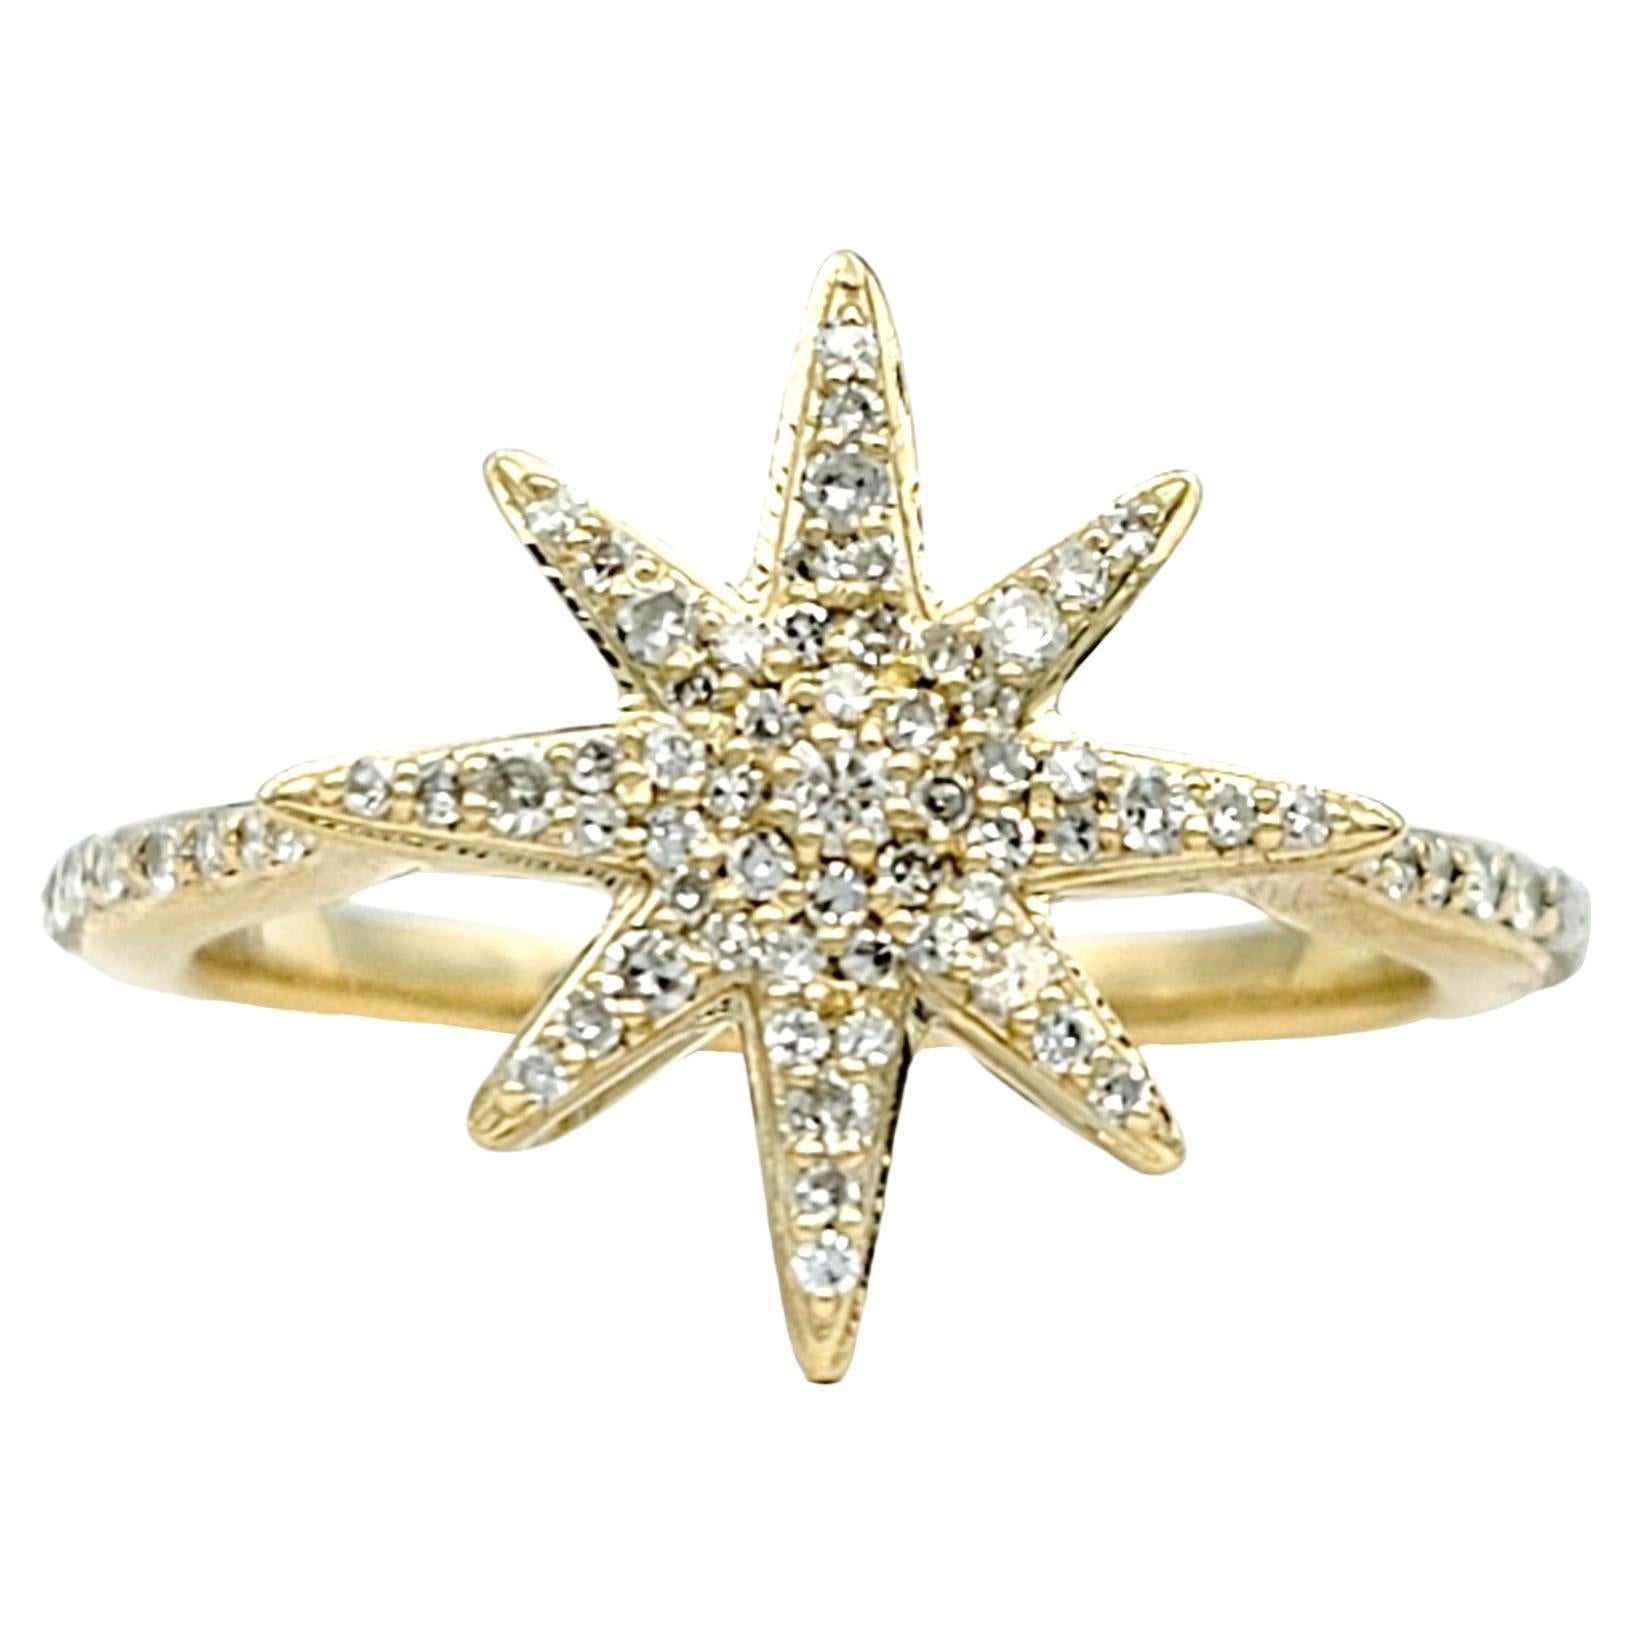 Pavé Diamant 8-Punkt Stern Motiv Ring in poliertem 14 Karat Gelbgold